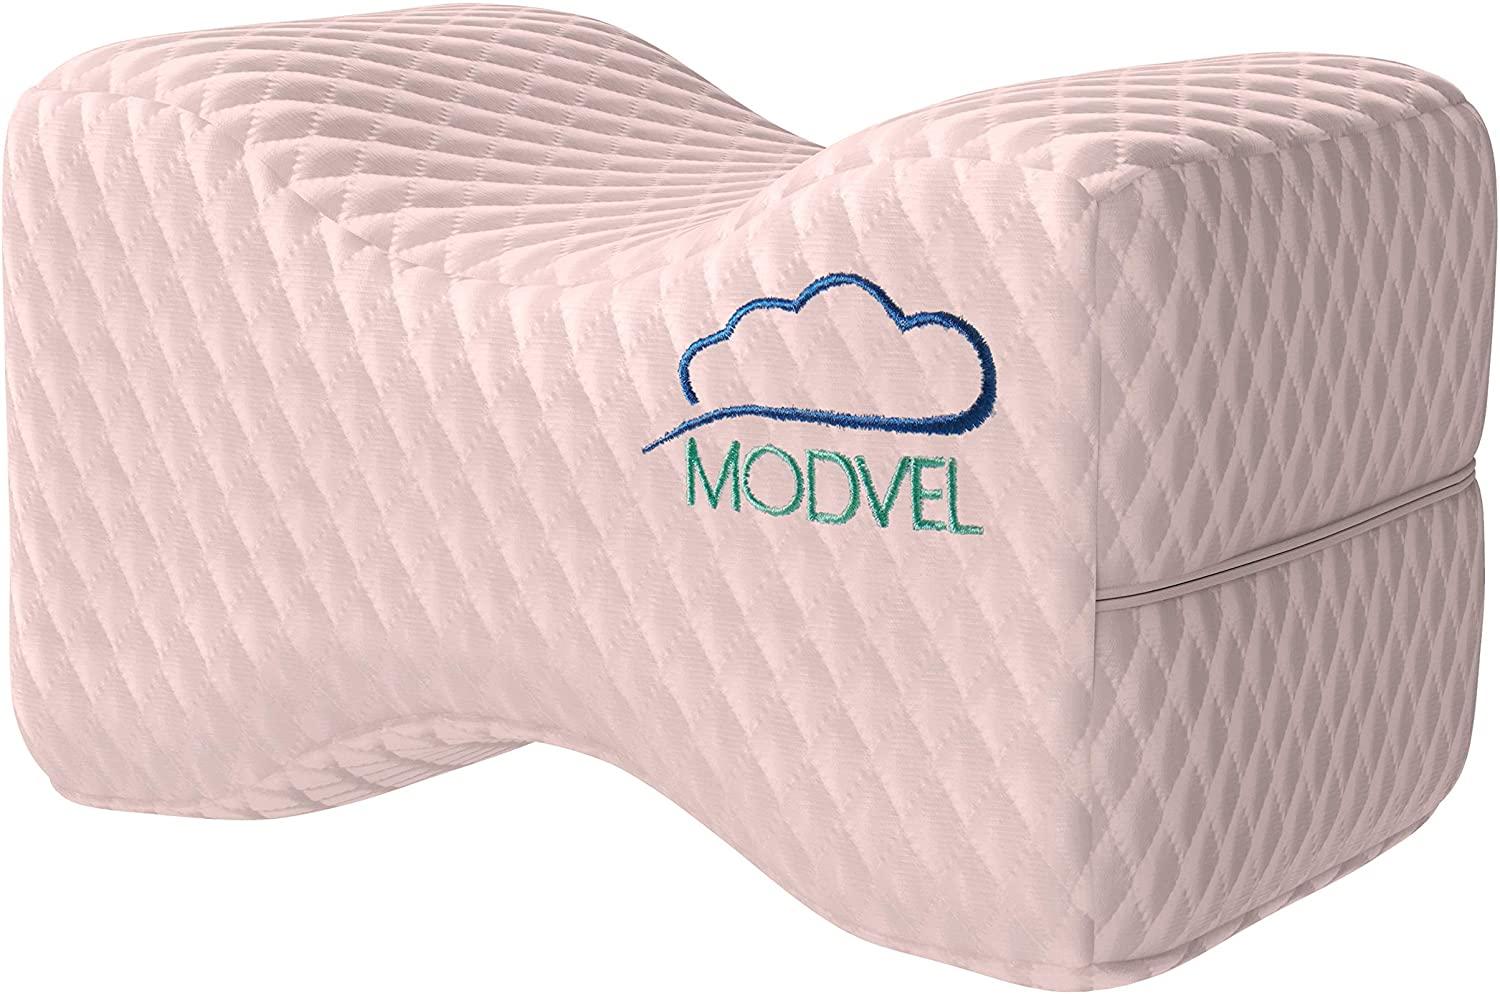 Modvel Memory Foam Pink Orthopedic Knee Pillow for $12.03 Shipped